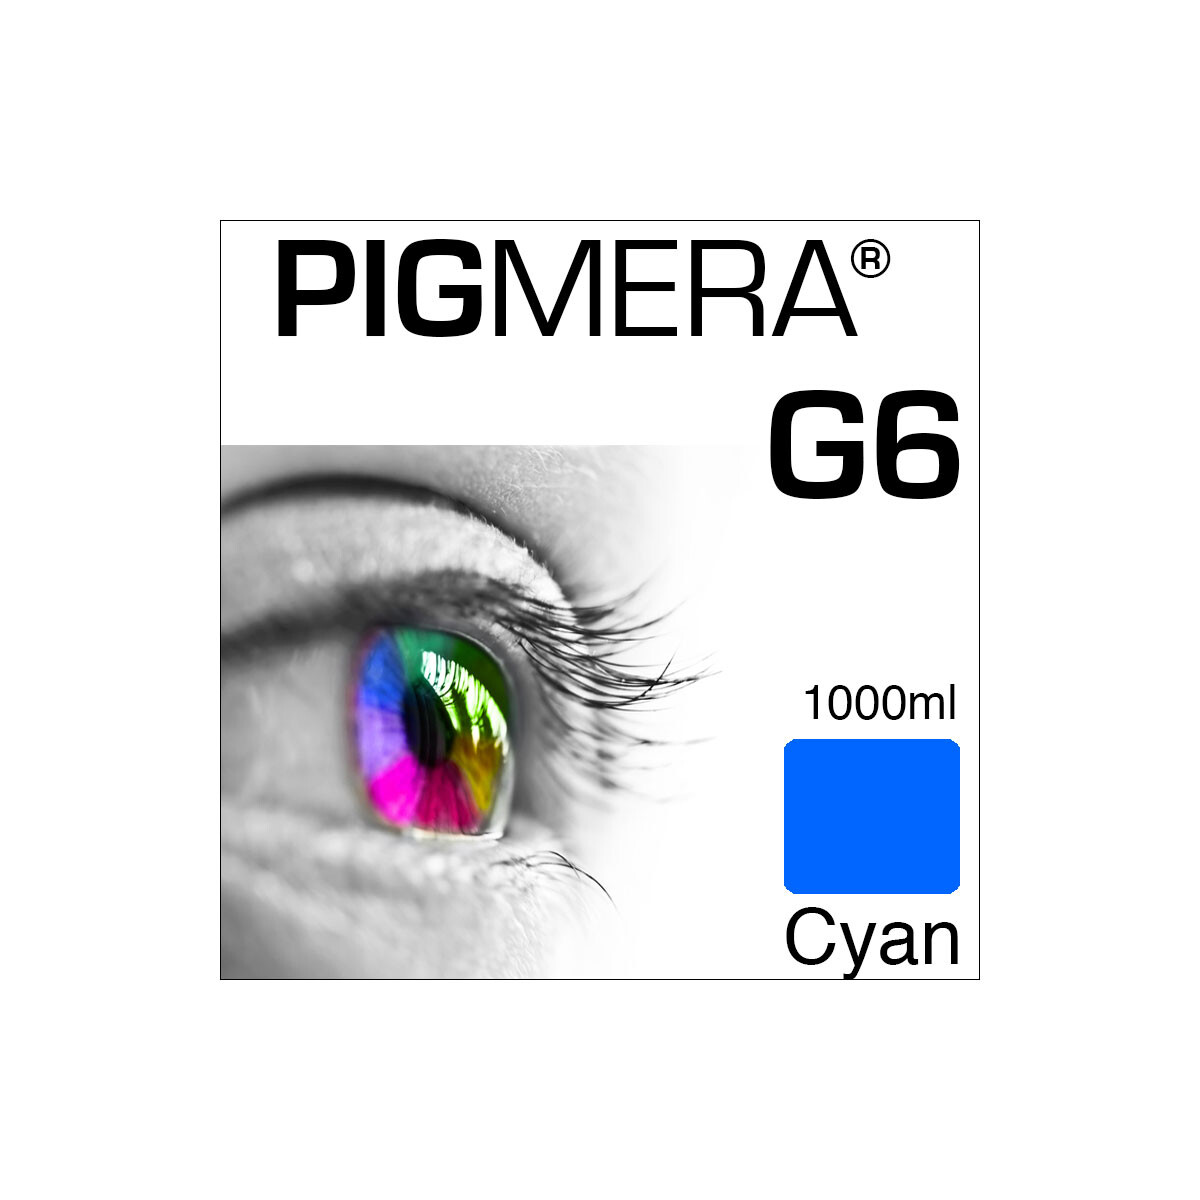 farbenwerk Pigmera G6 Bottle Cyan 1000ml